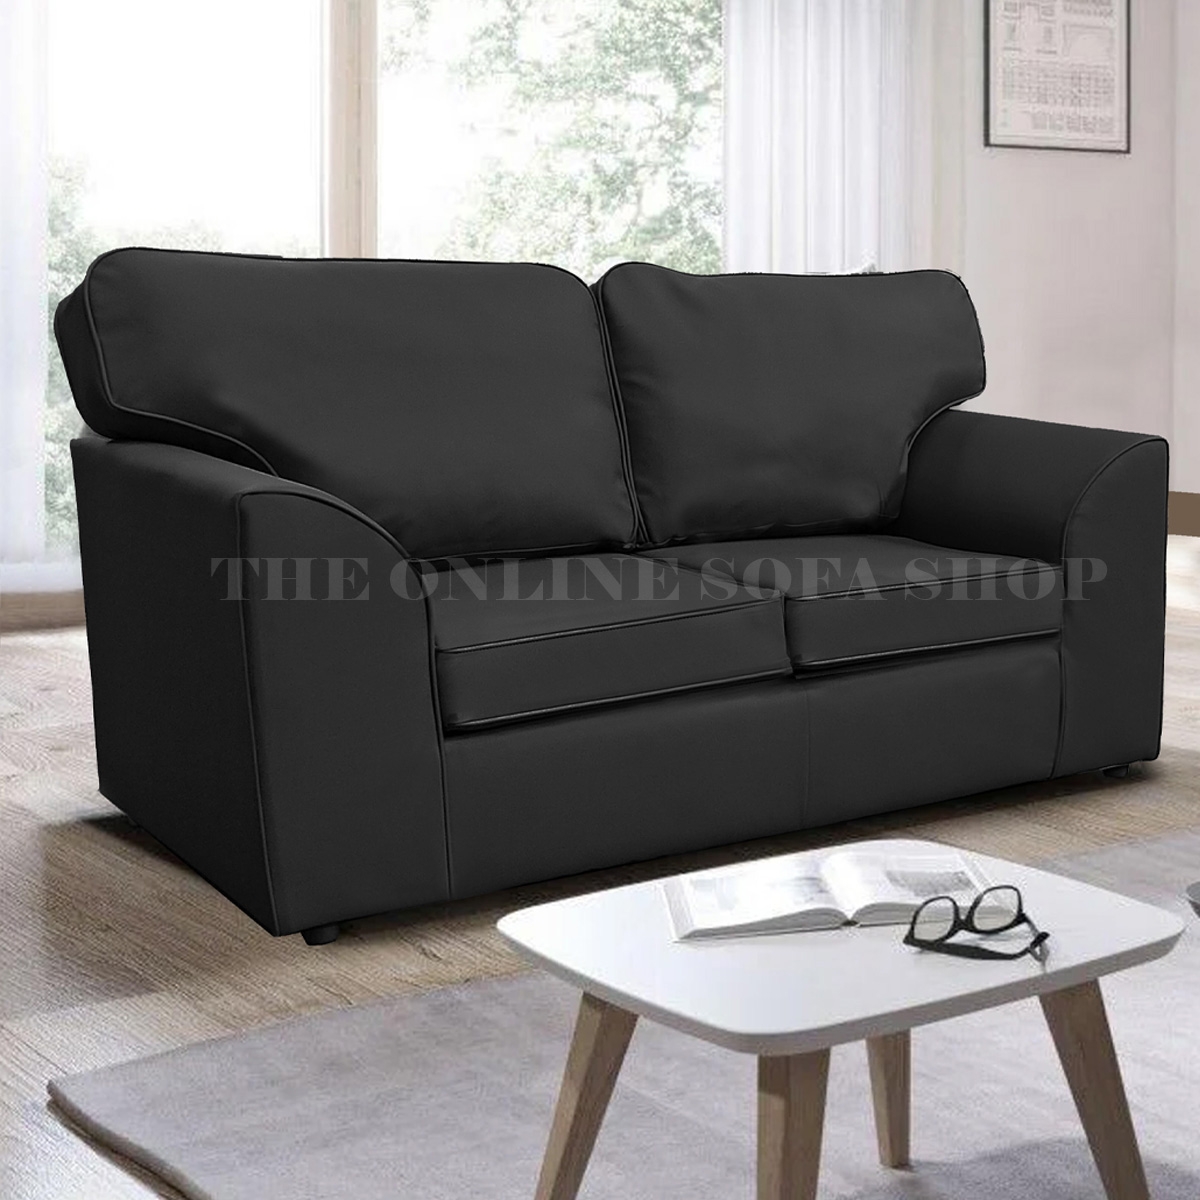 Danbury 2 Seater Leather Sofa – Black – The Online Sofa Shop